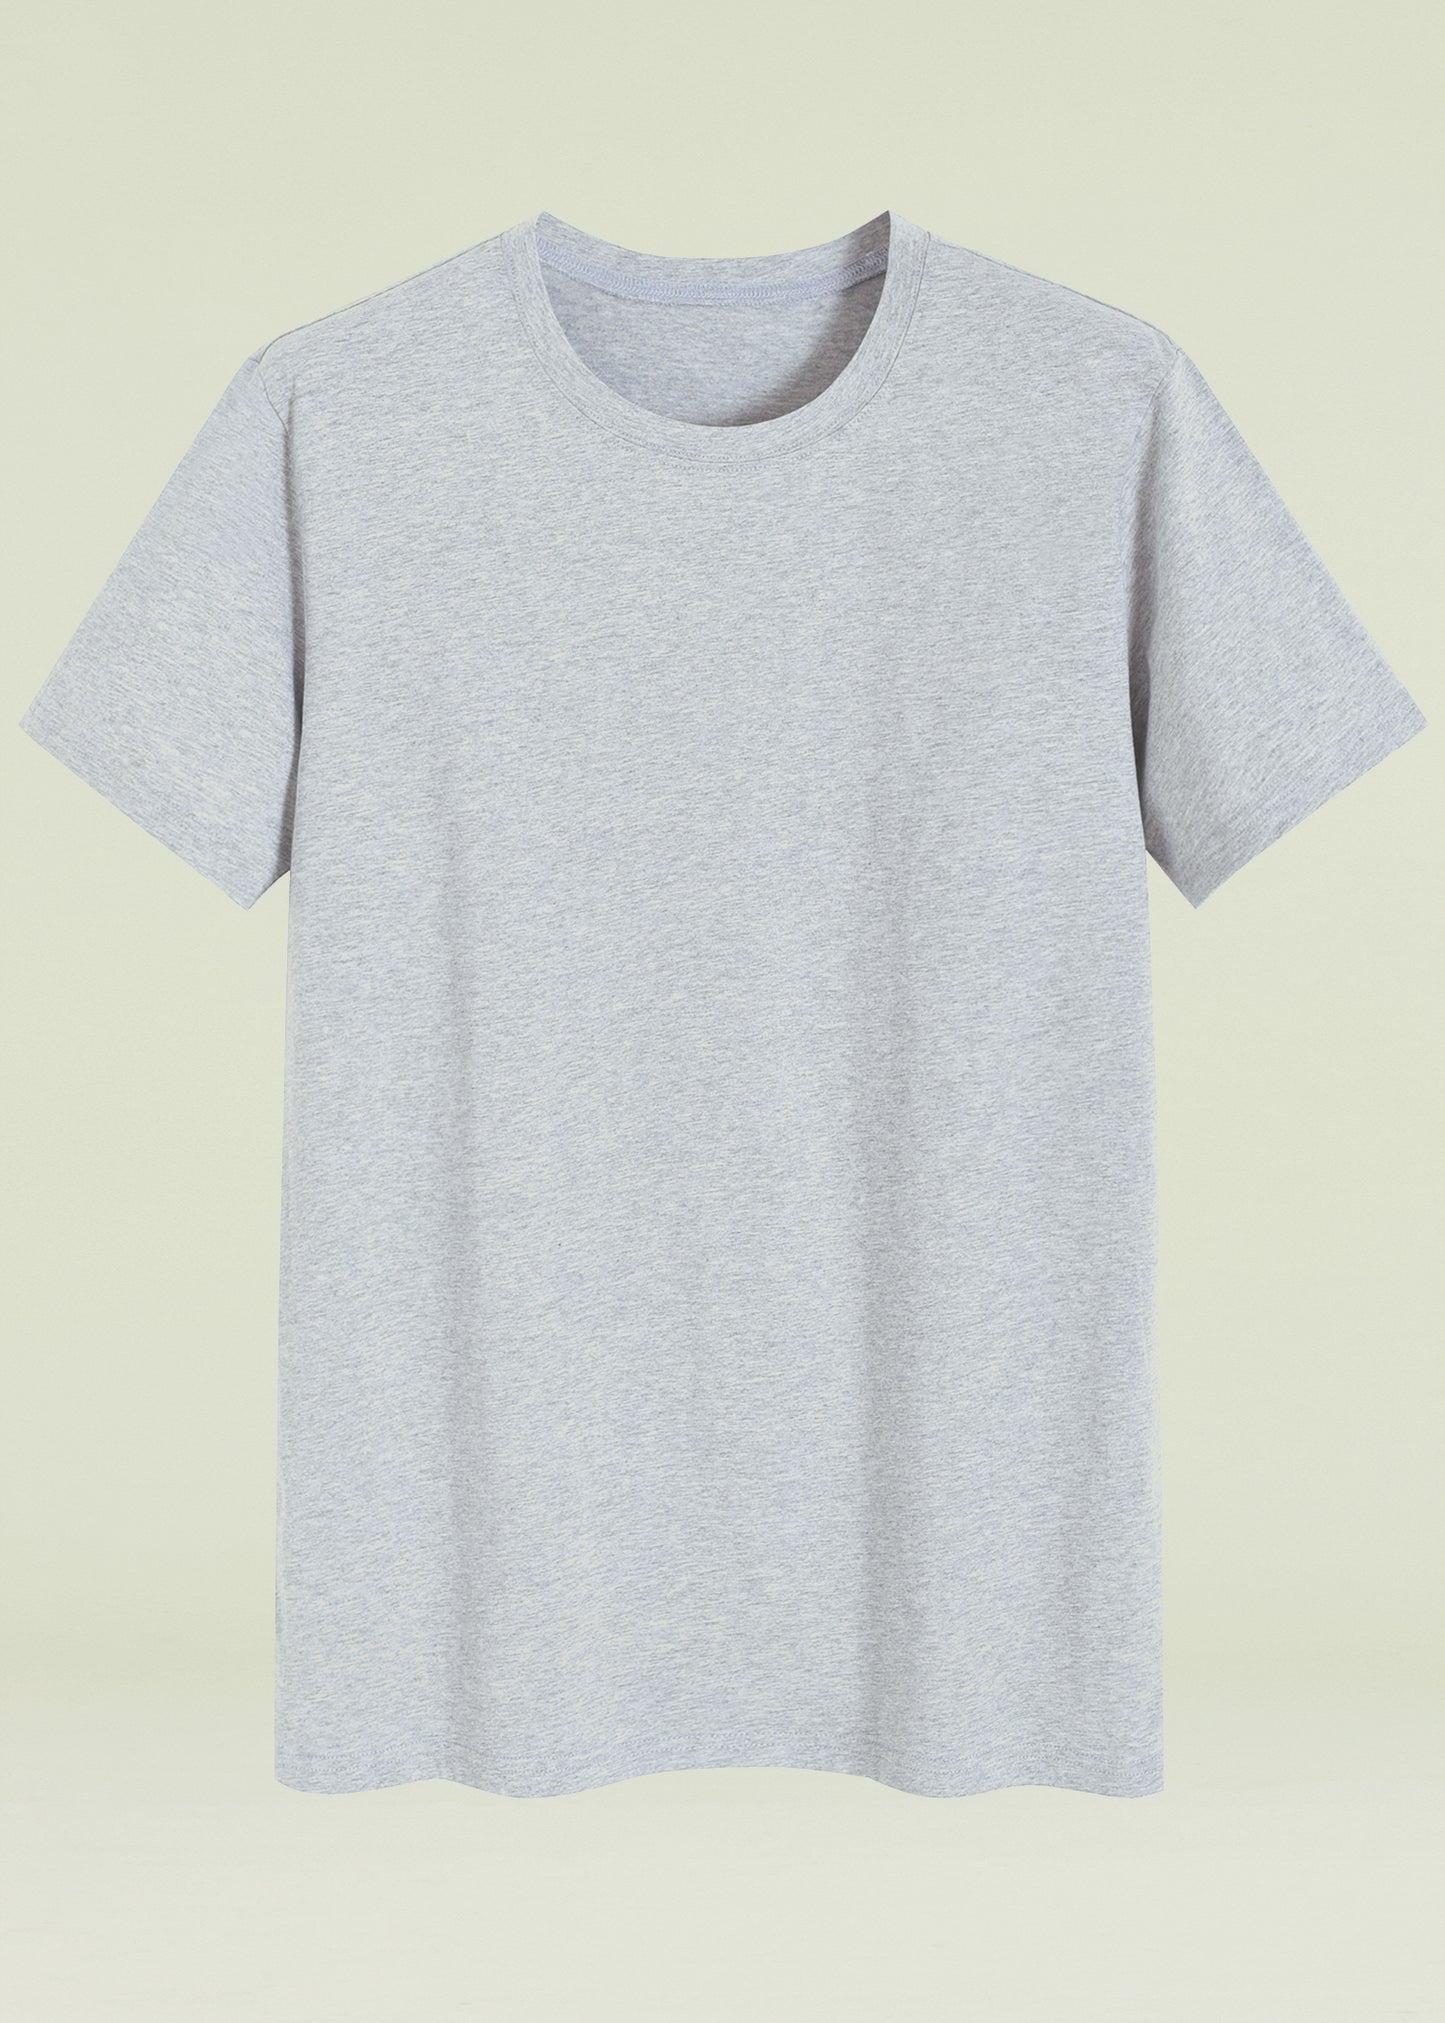 Men's Basic Cotton Knit Sleep T-Shirt Comfortable Pajama Shirt